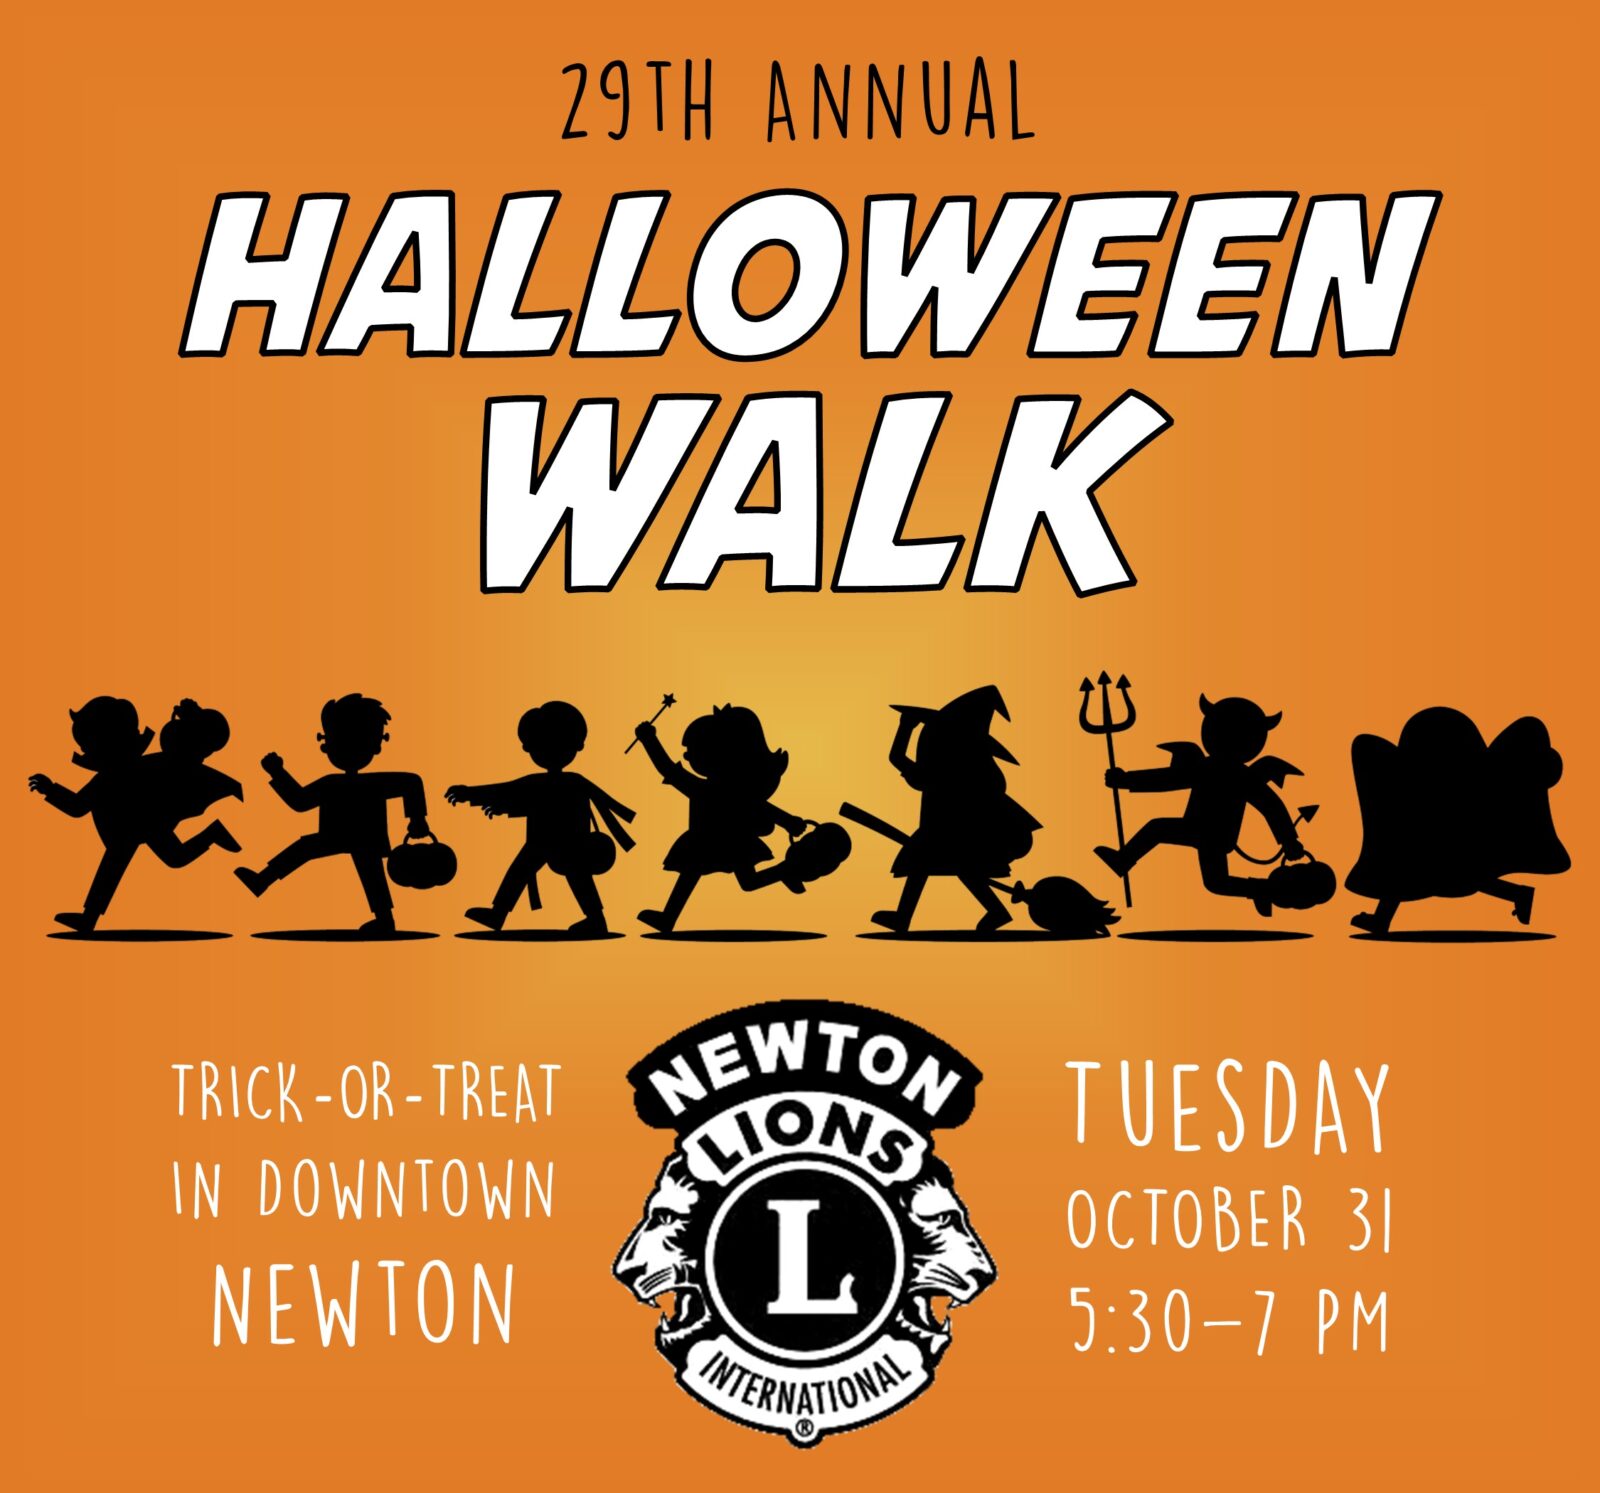 Halloween Walk, Tuesday, Oct. 31 5:30-7 pm